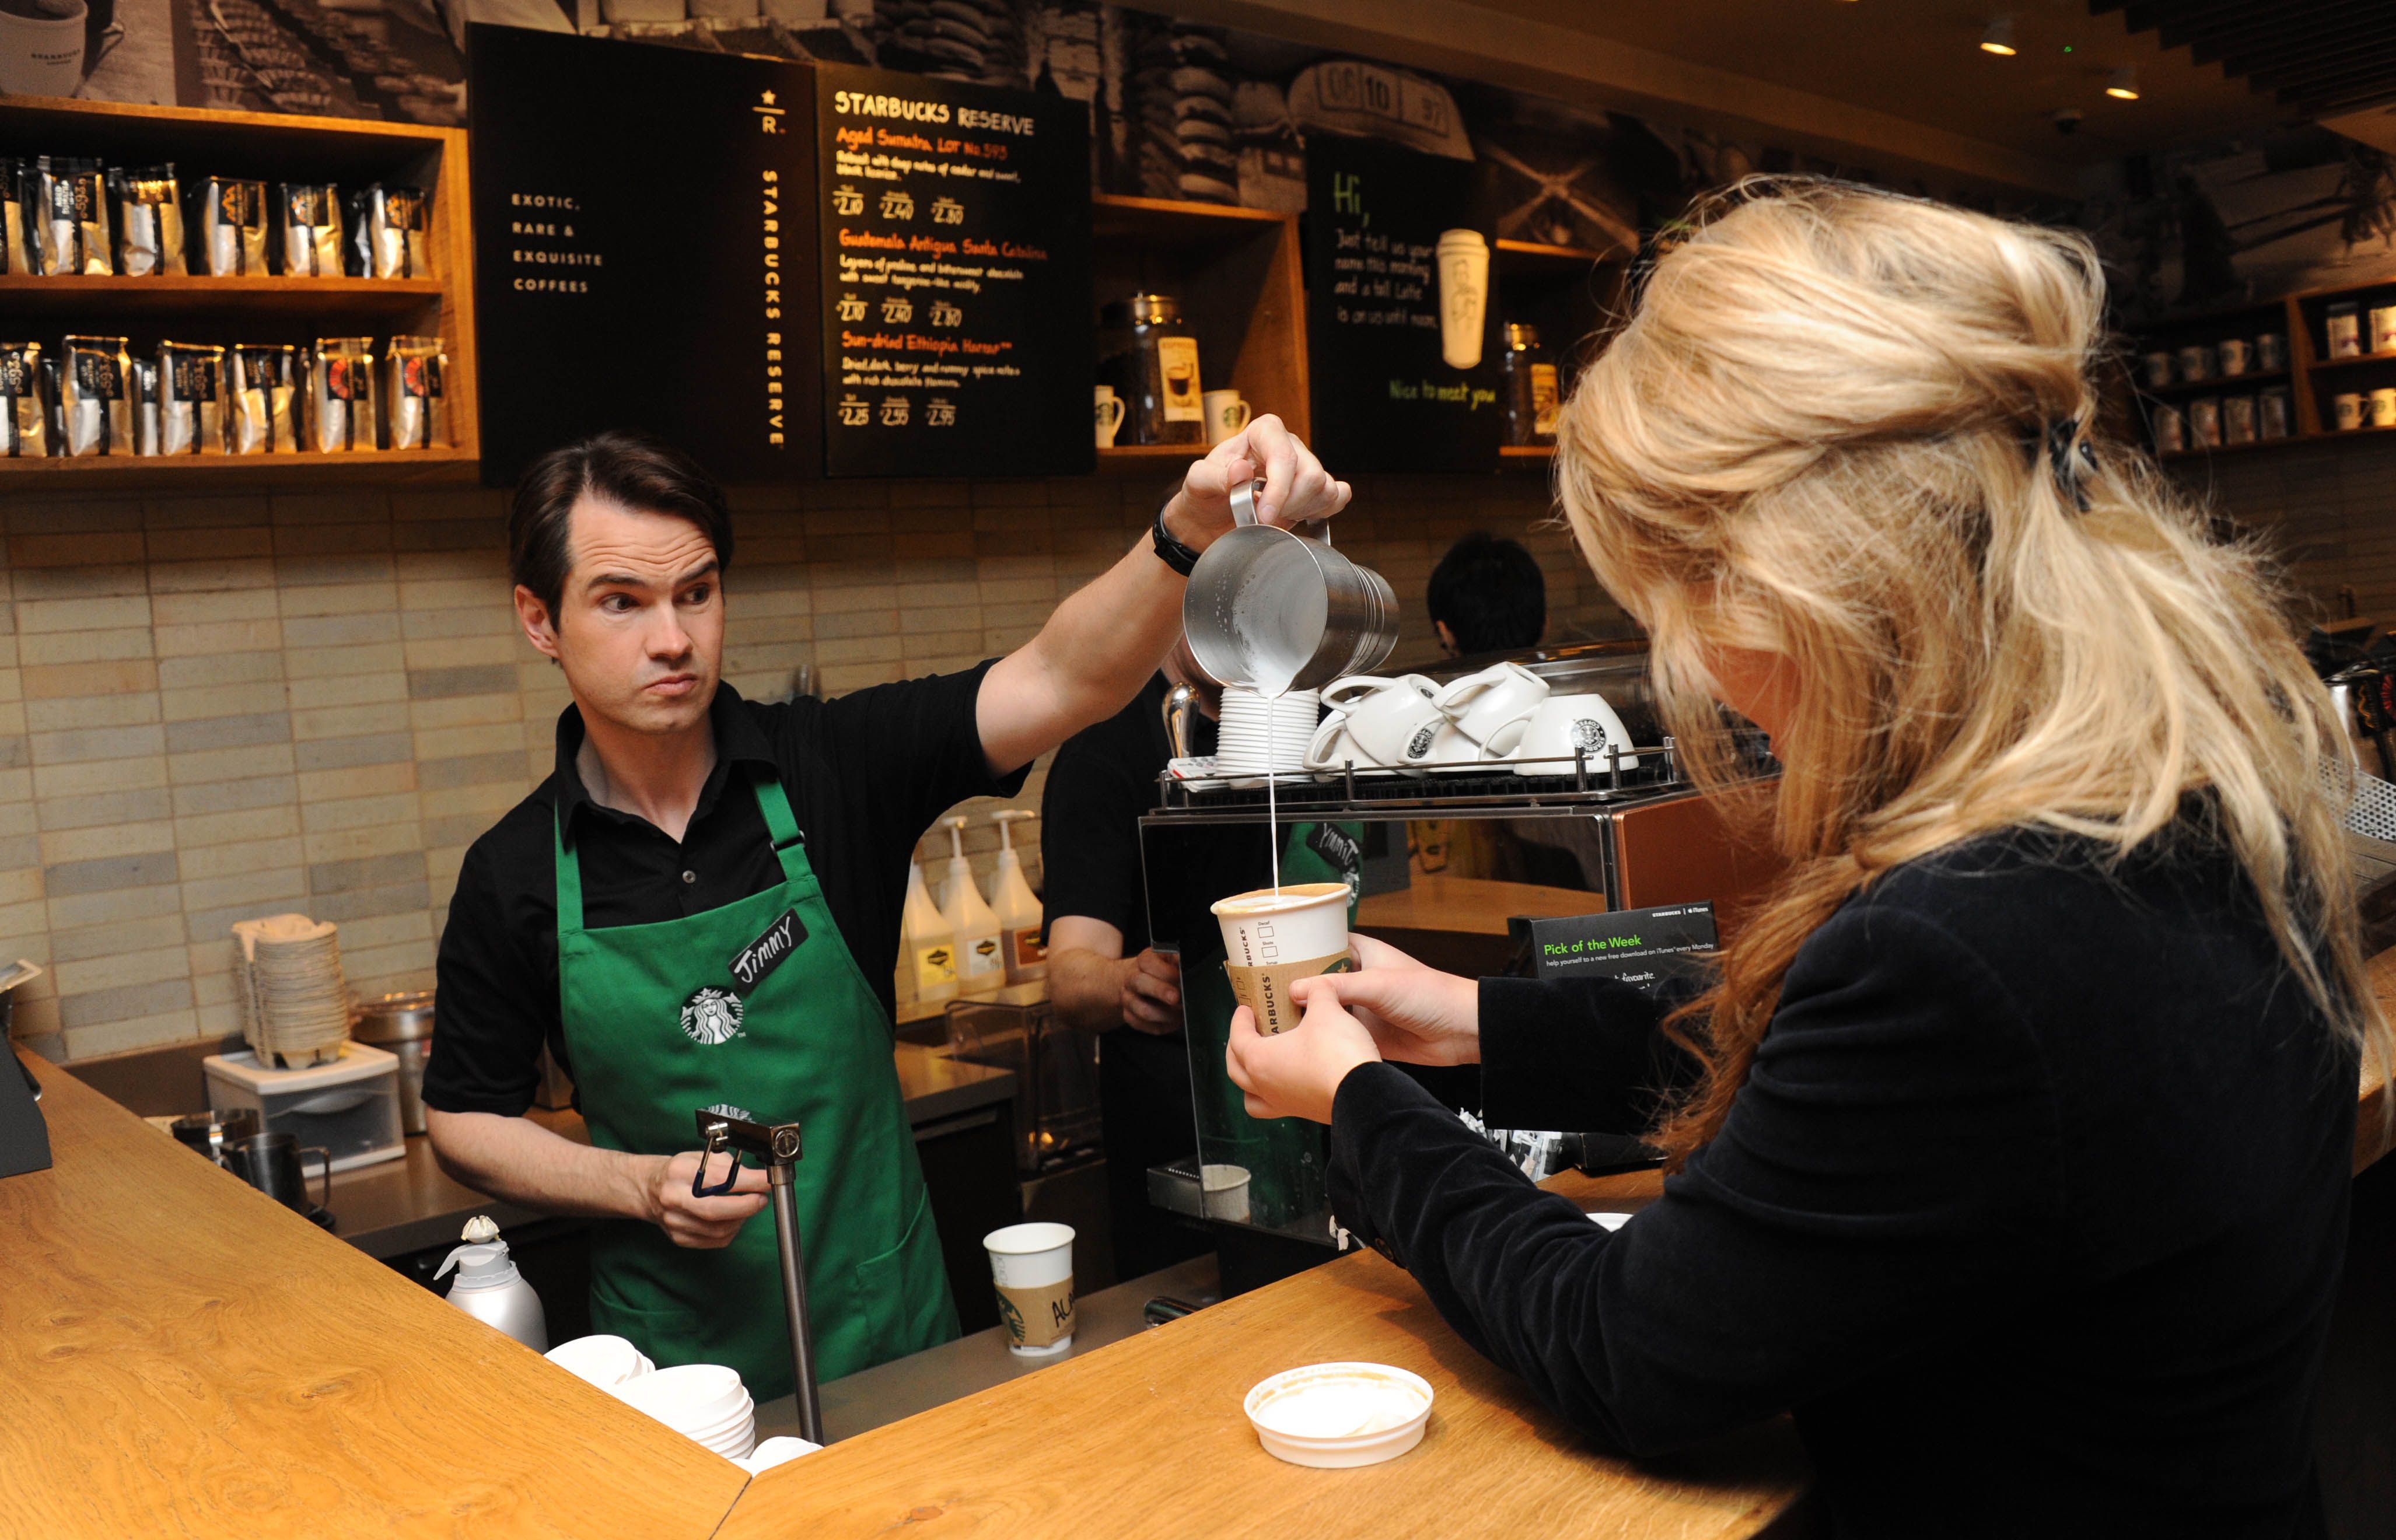 Starbucks pushes for 'individuality' in dress code revamp | Globalnews.ca